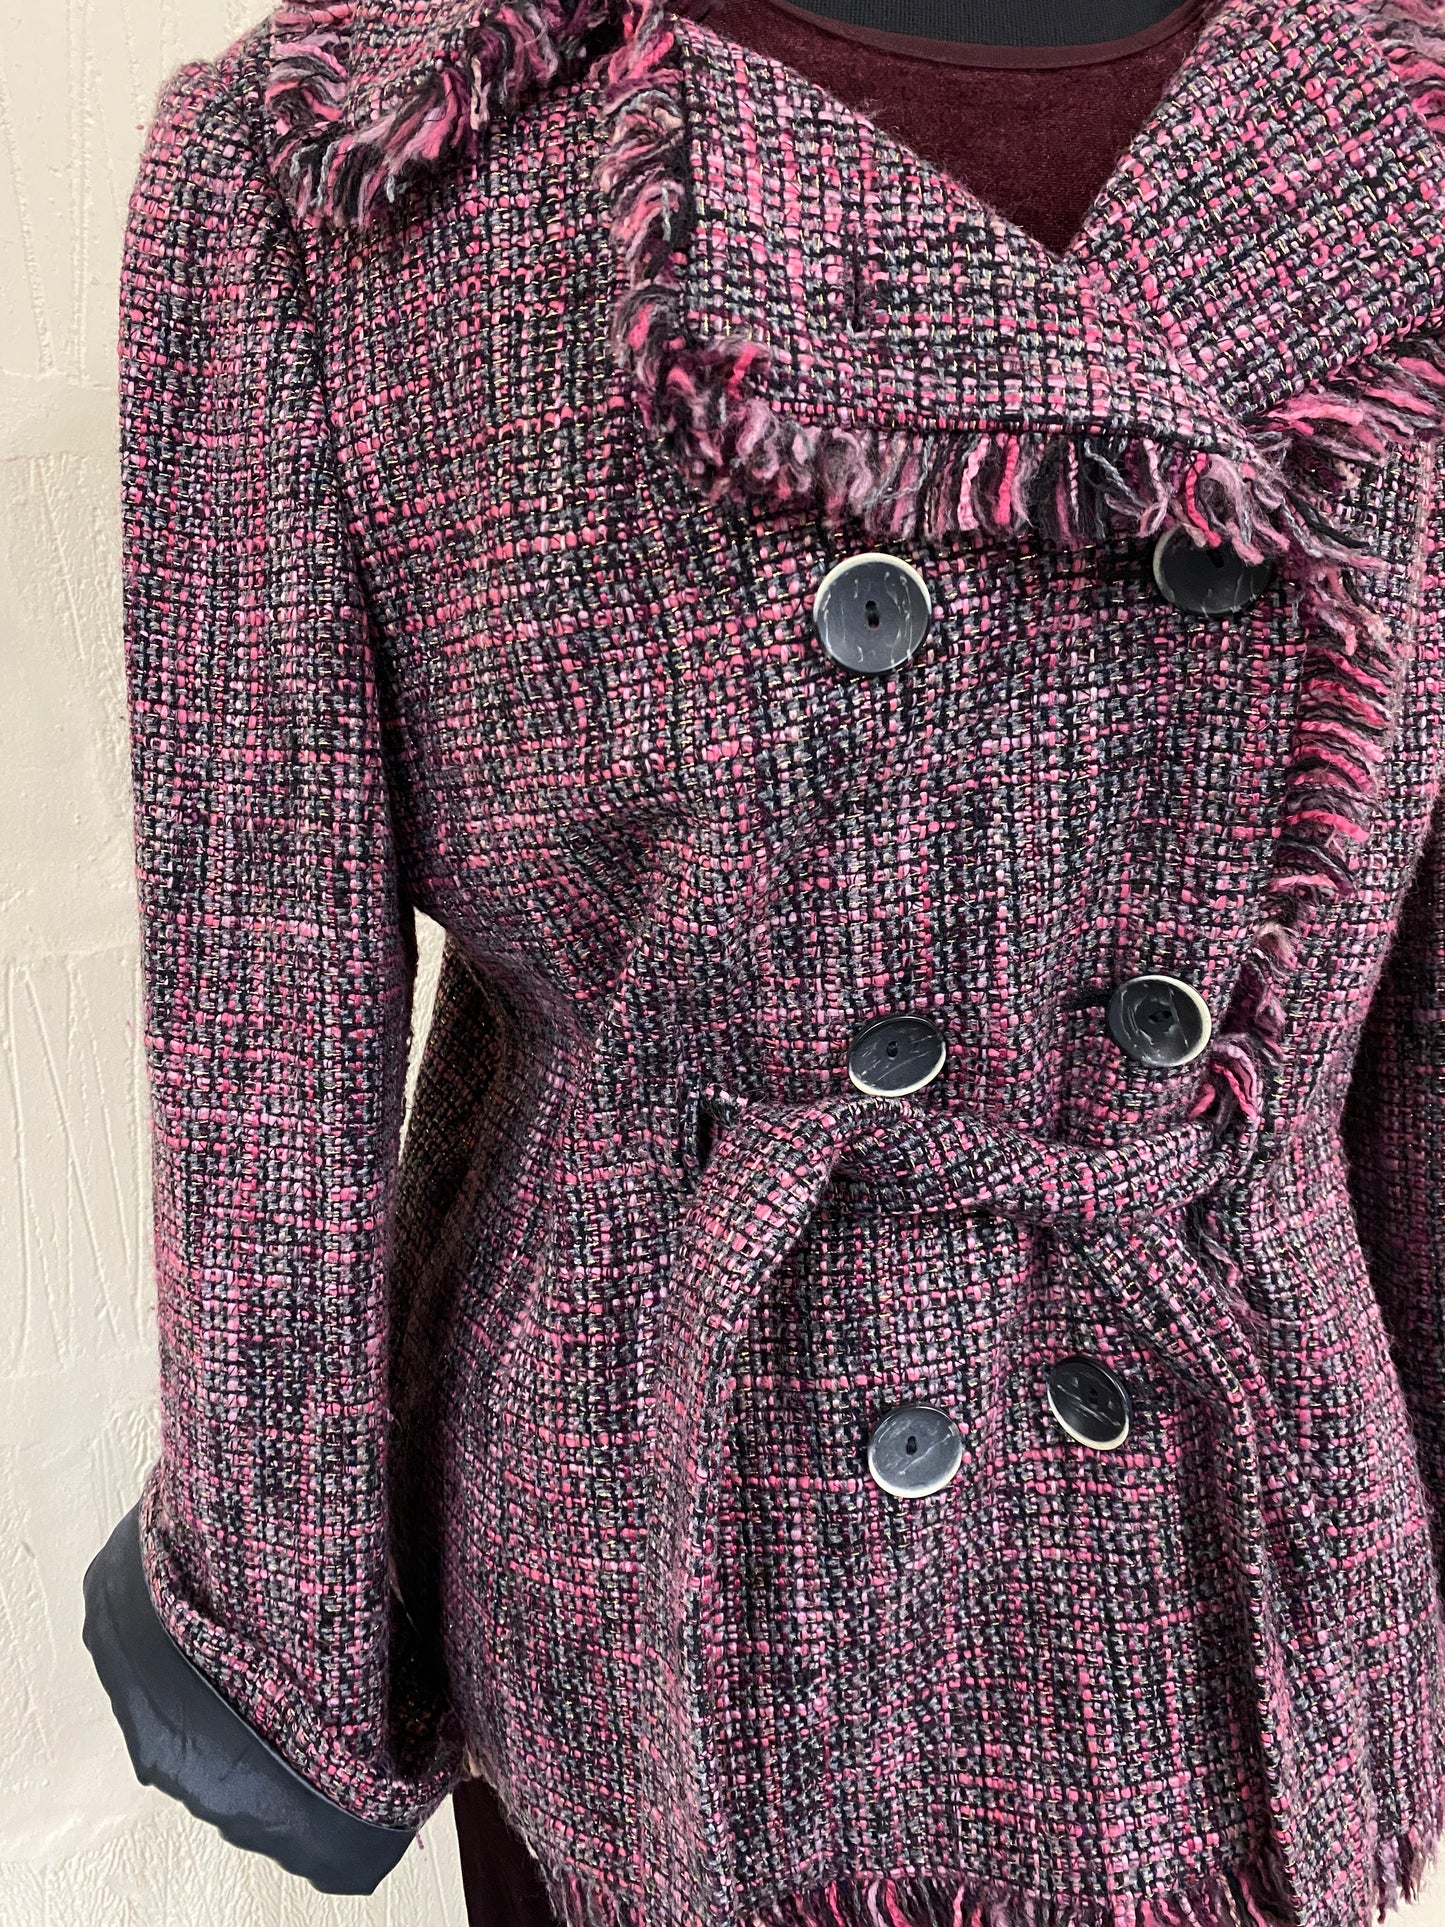 Vintage Purple Tweed Coat Size 16